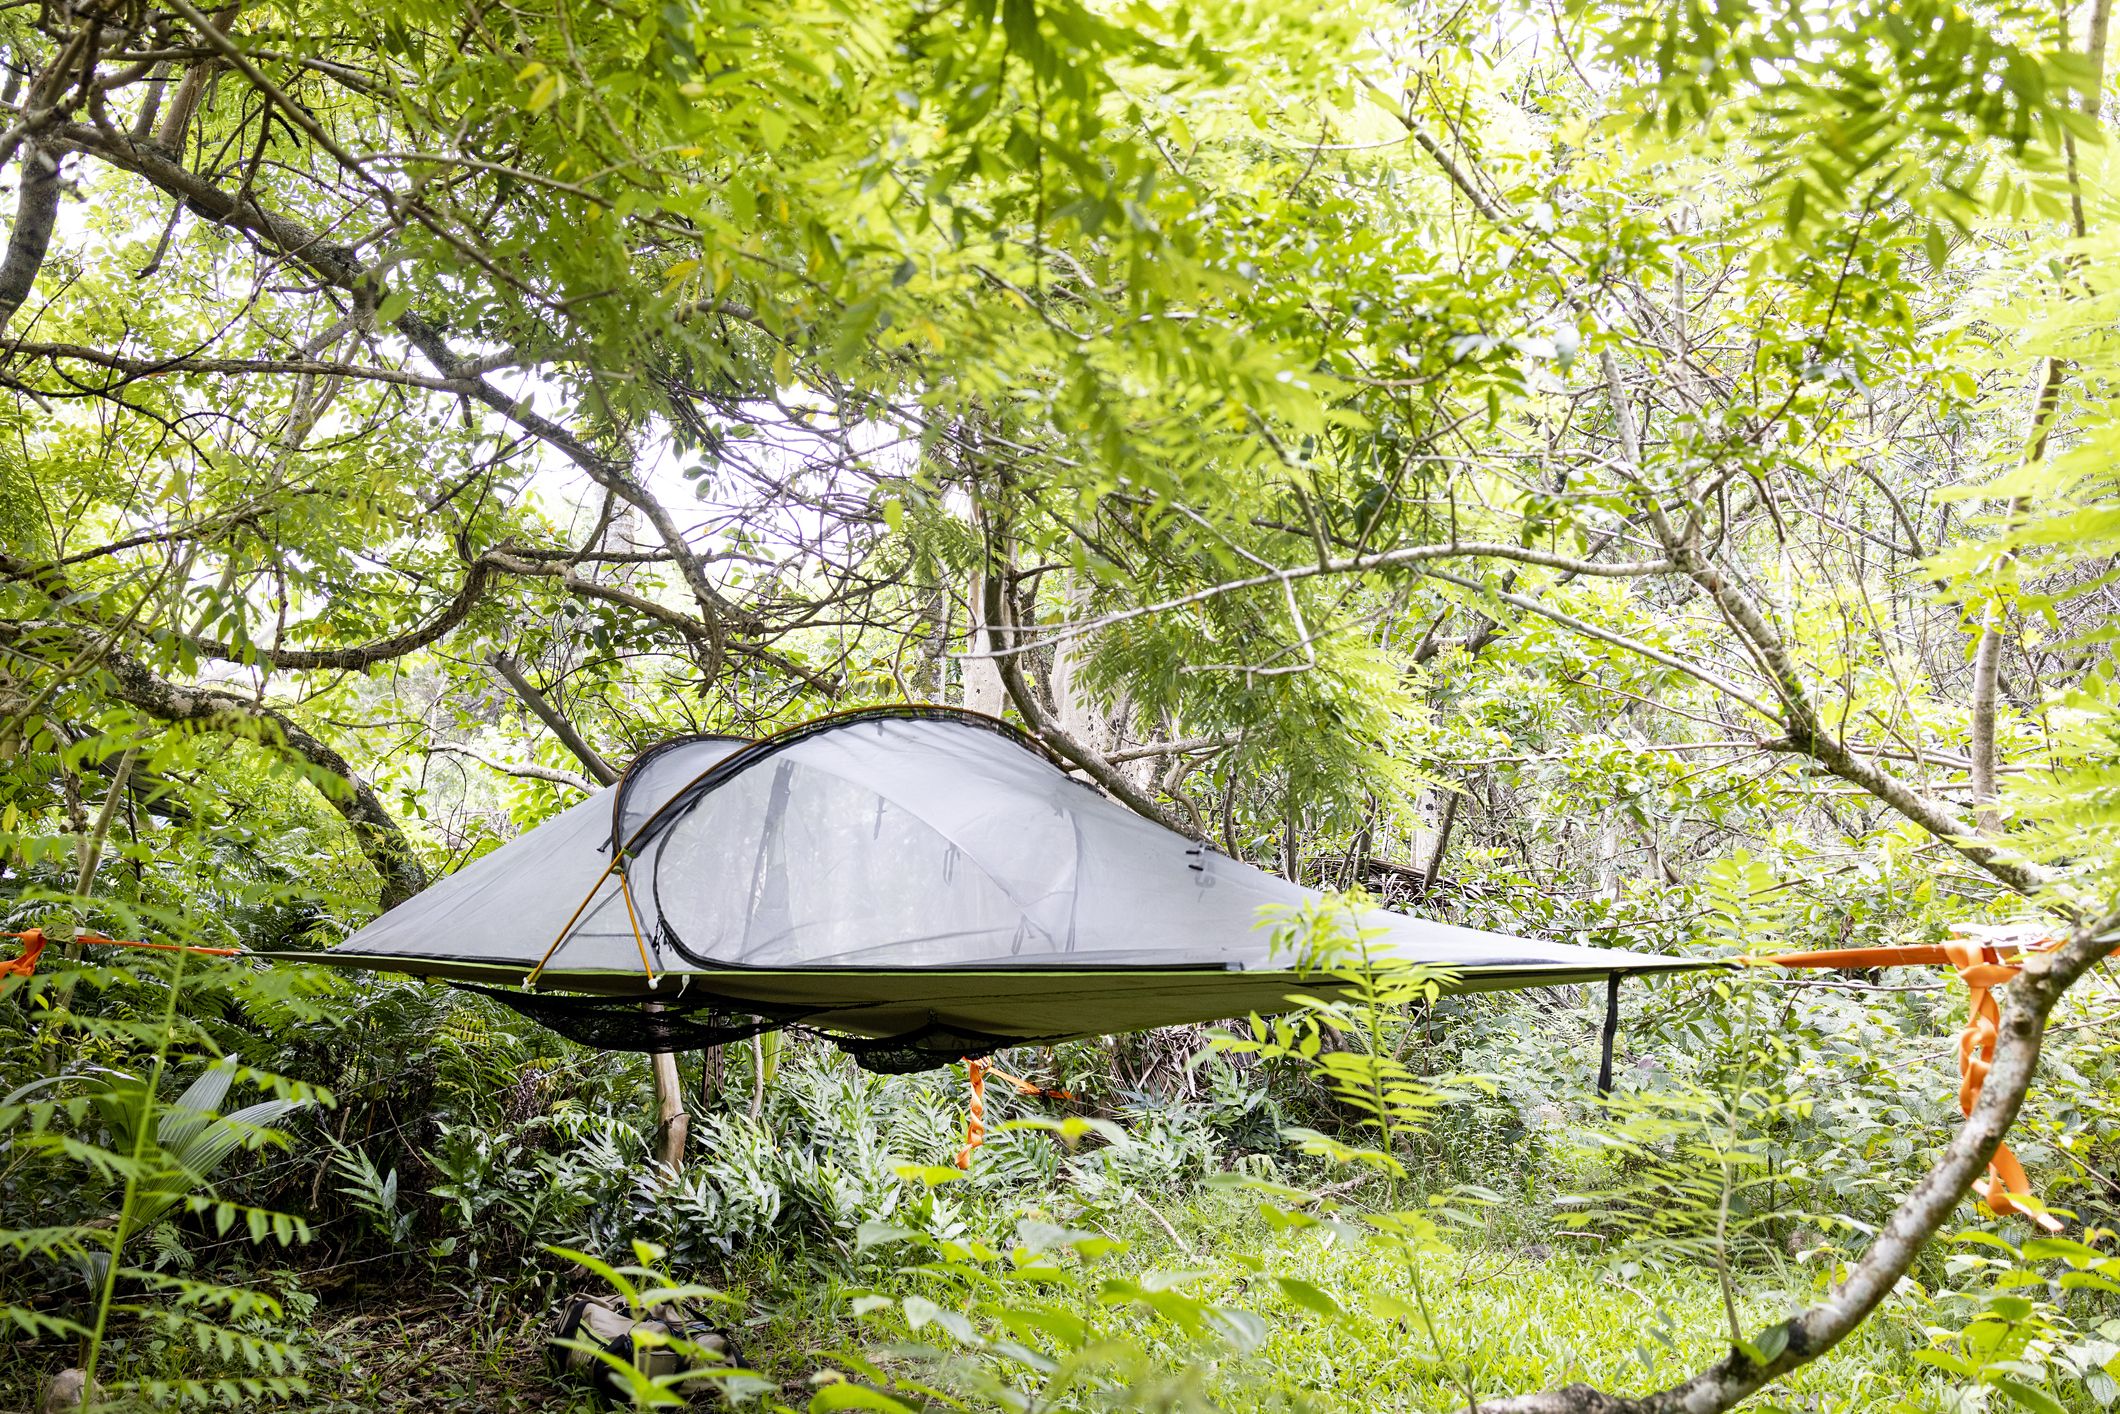 https://hips.hearstapps.com/hmg-prod/images/flying-hammock-tent-in-jungle-royalty-free-image-1686670224.jpg